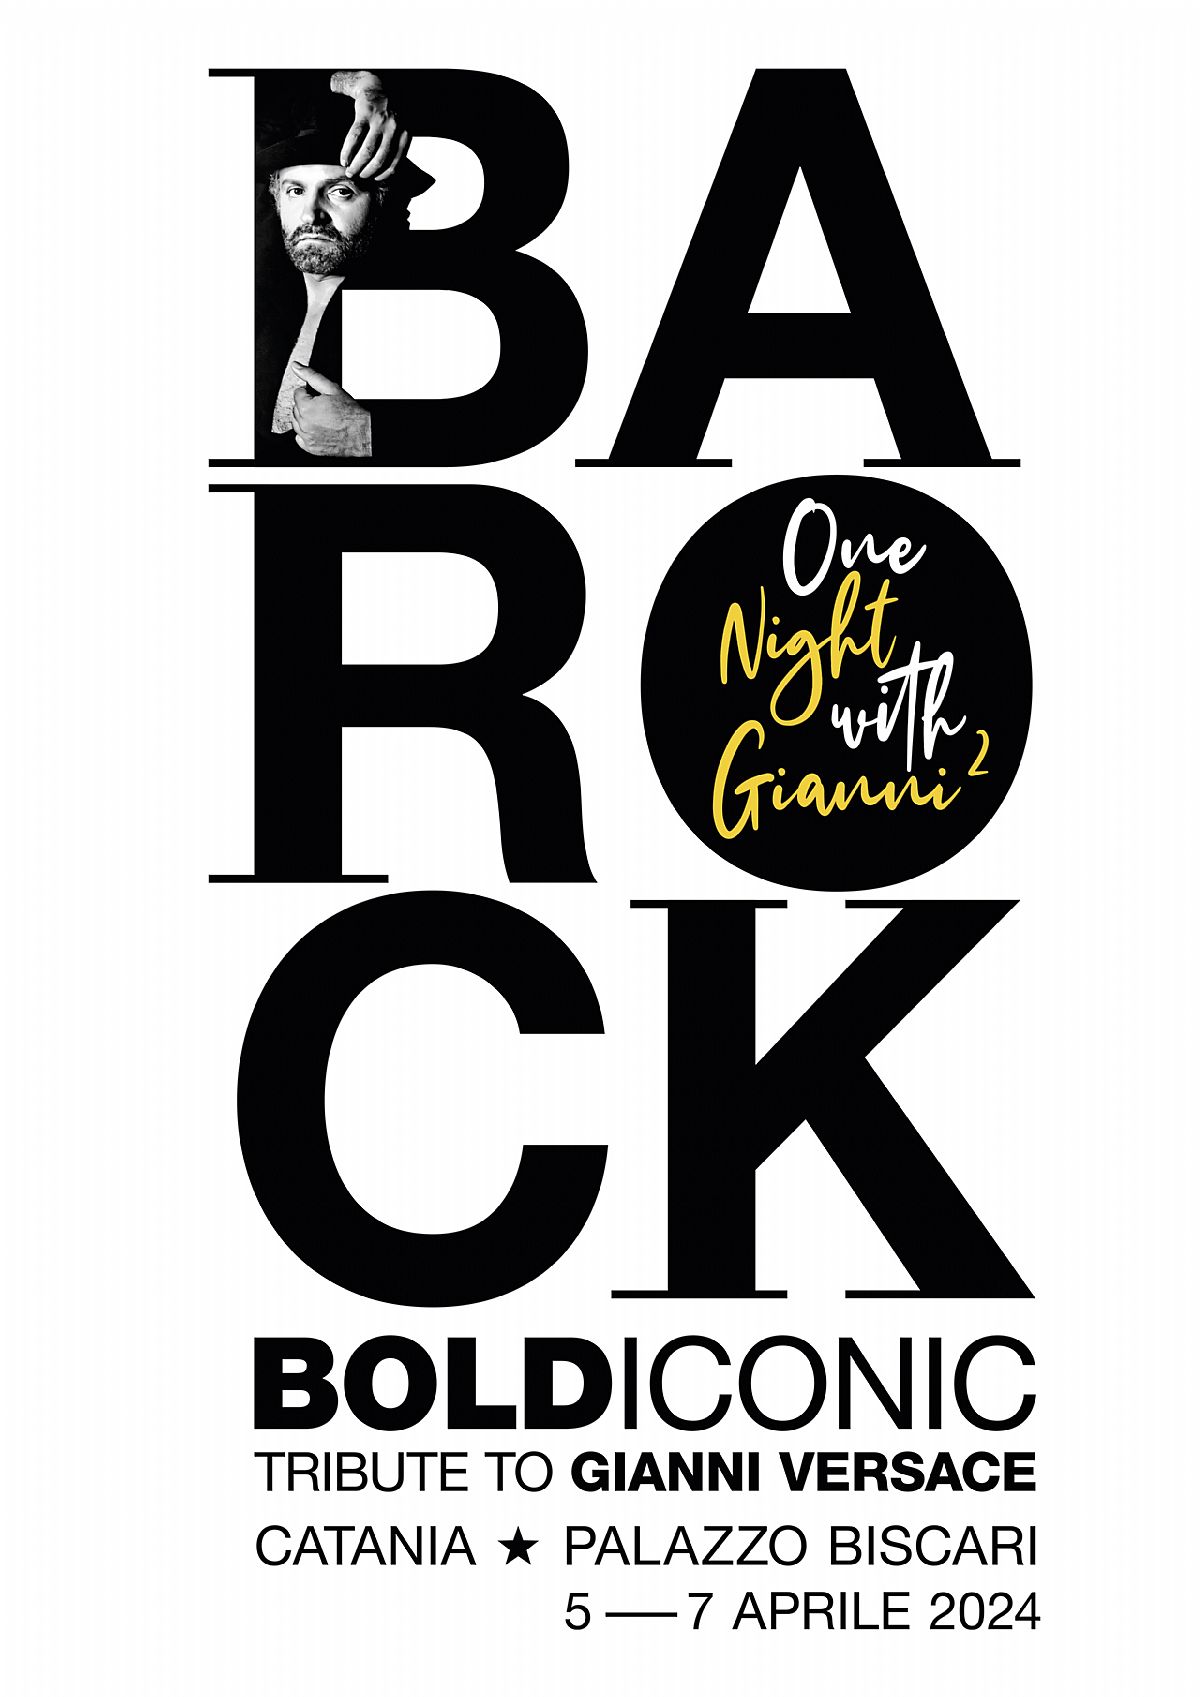 BAROCK  Bold Iconic